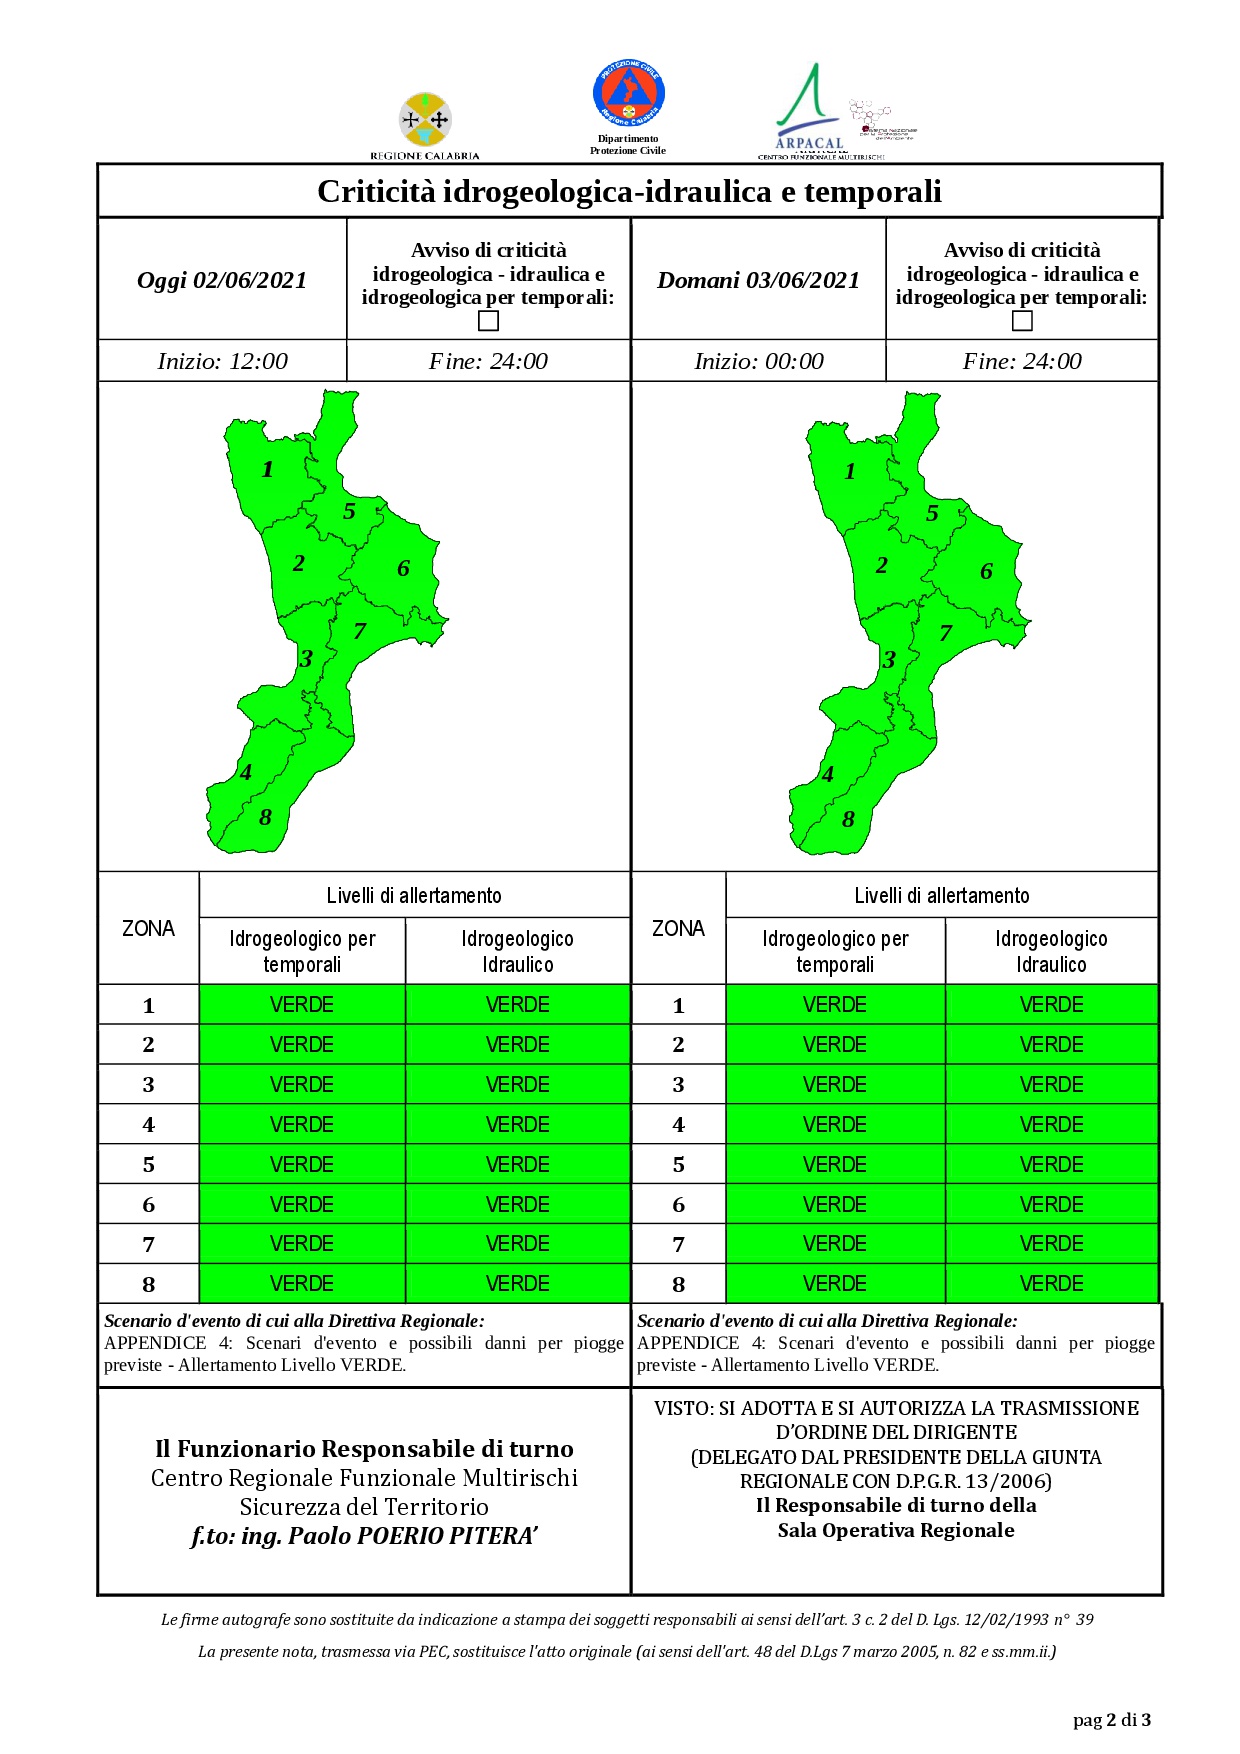 Criticità idrogeologica-idraulica e temporali in Calabria 02-06-2021